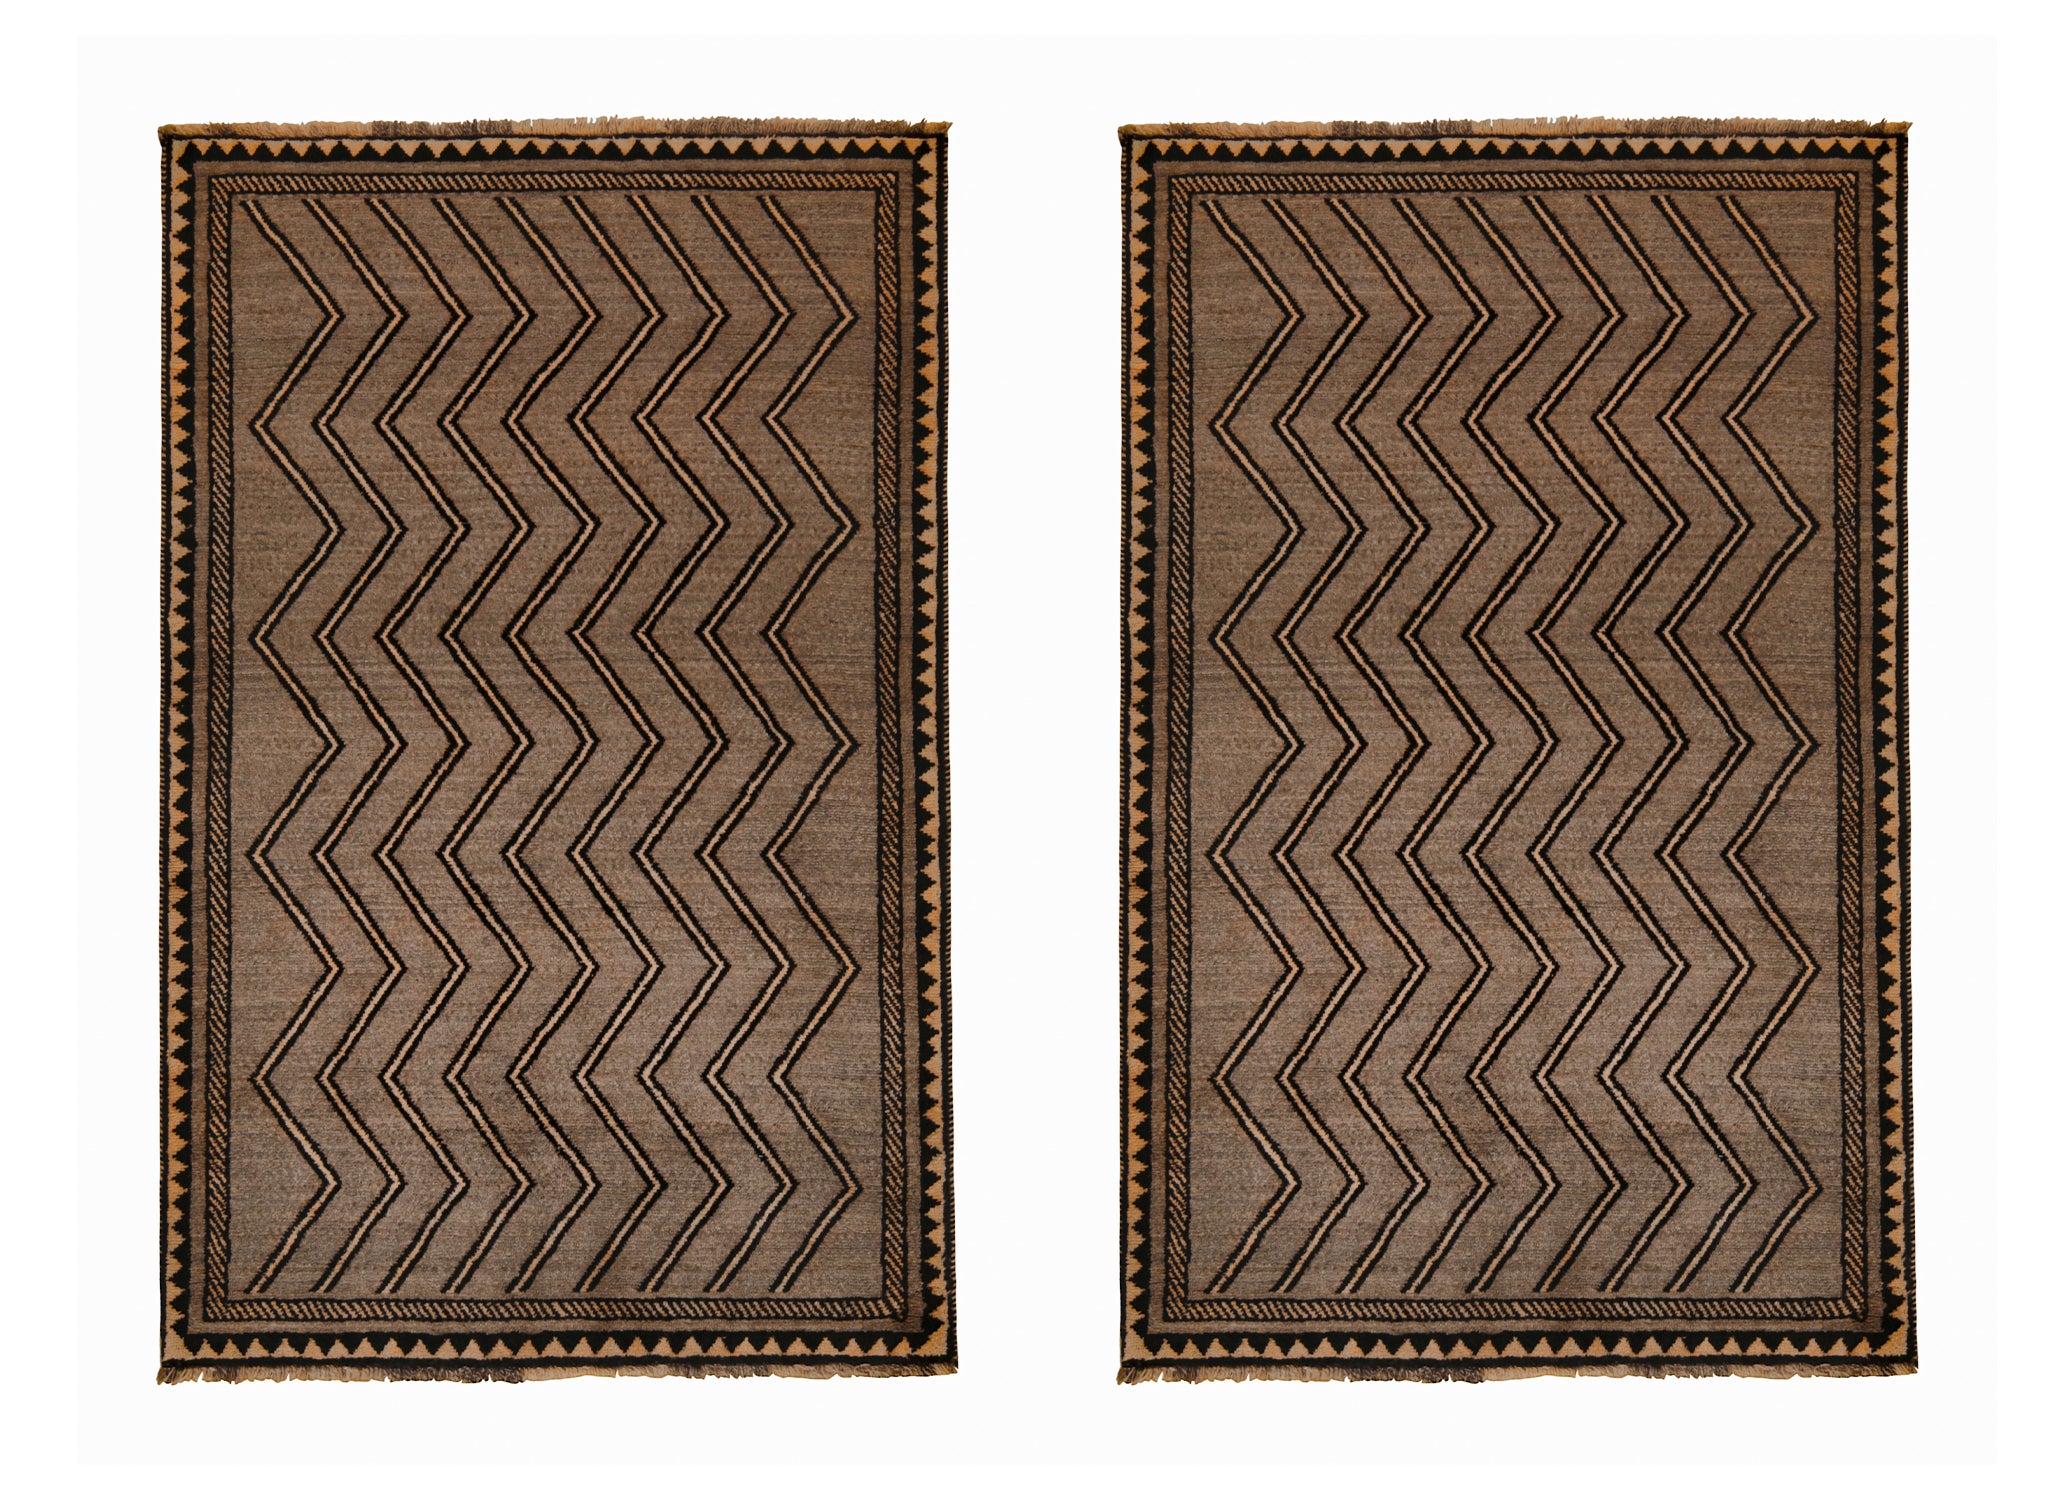 Vintage Gabbeh Tribal Rug in Beige-Brown & Black Chevron Patterns by Rug Kilim For Sale